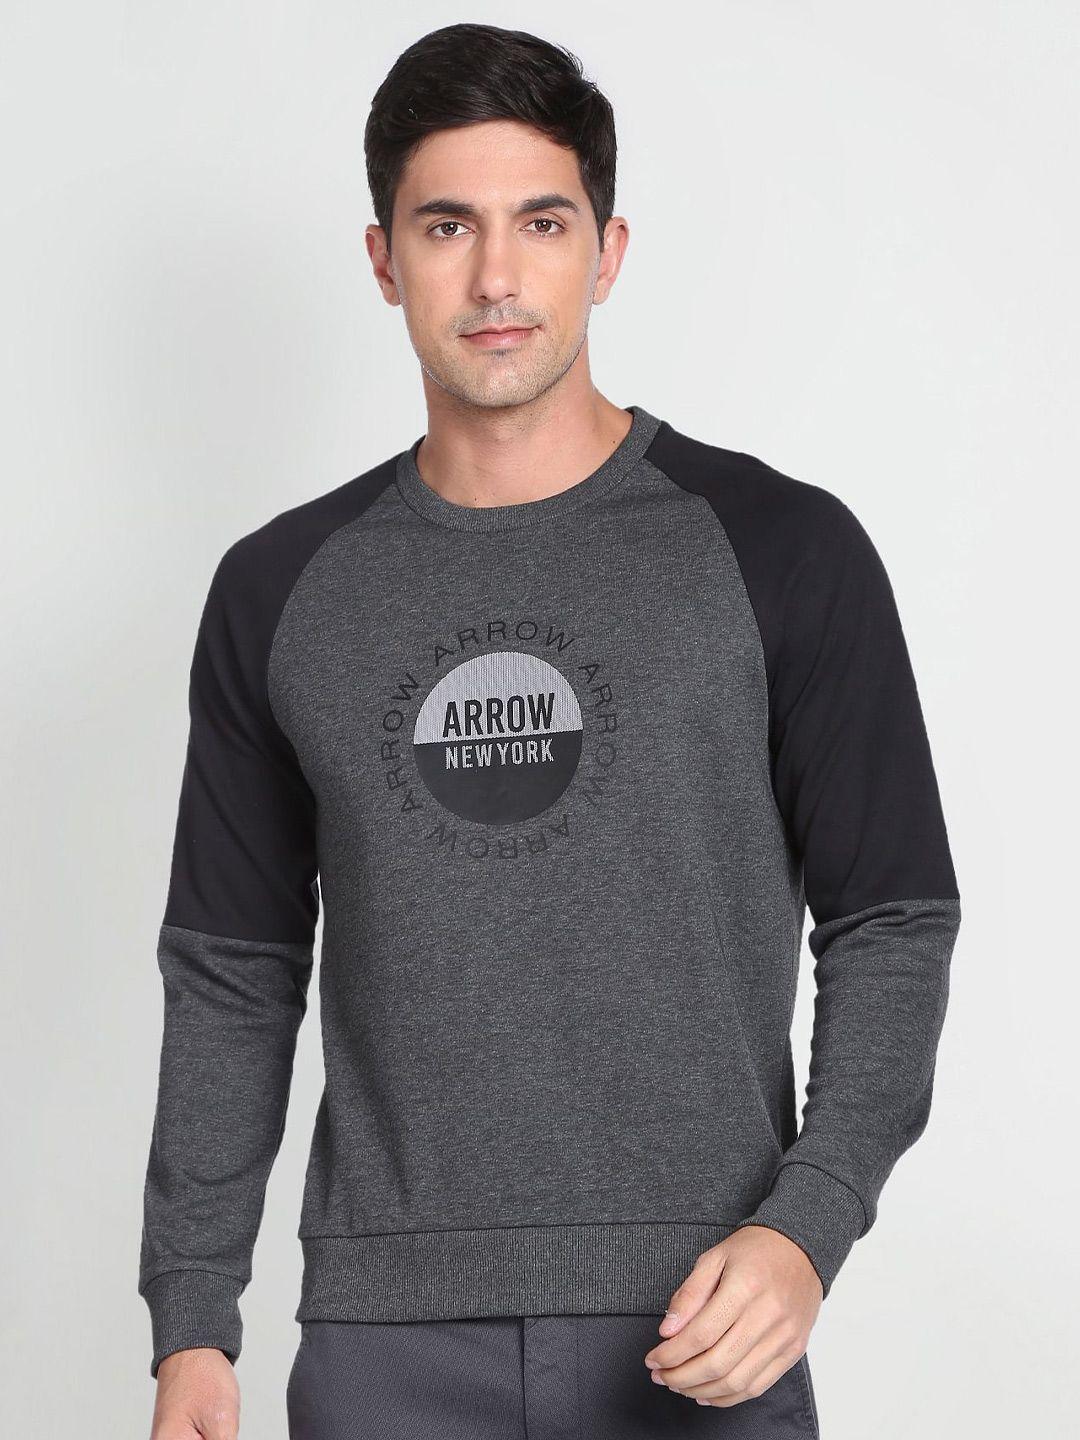 arrow new york round neck brand printed pullover sweatshirt